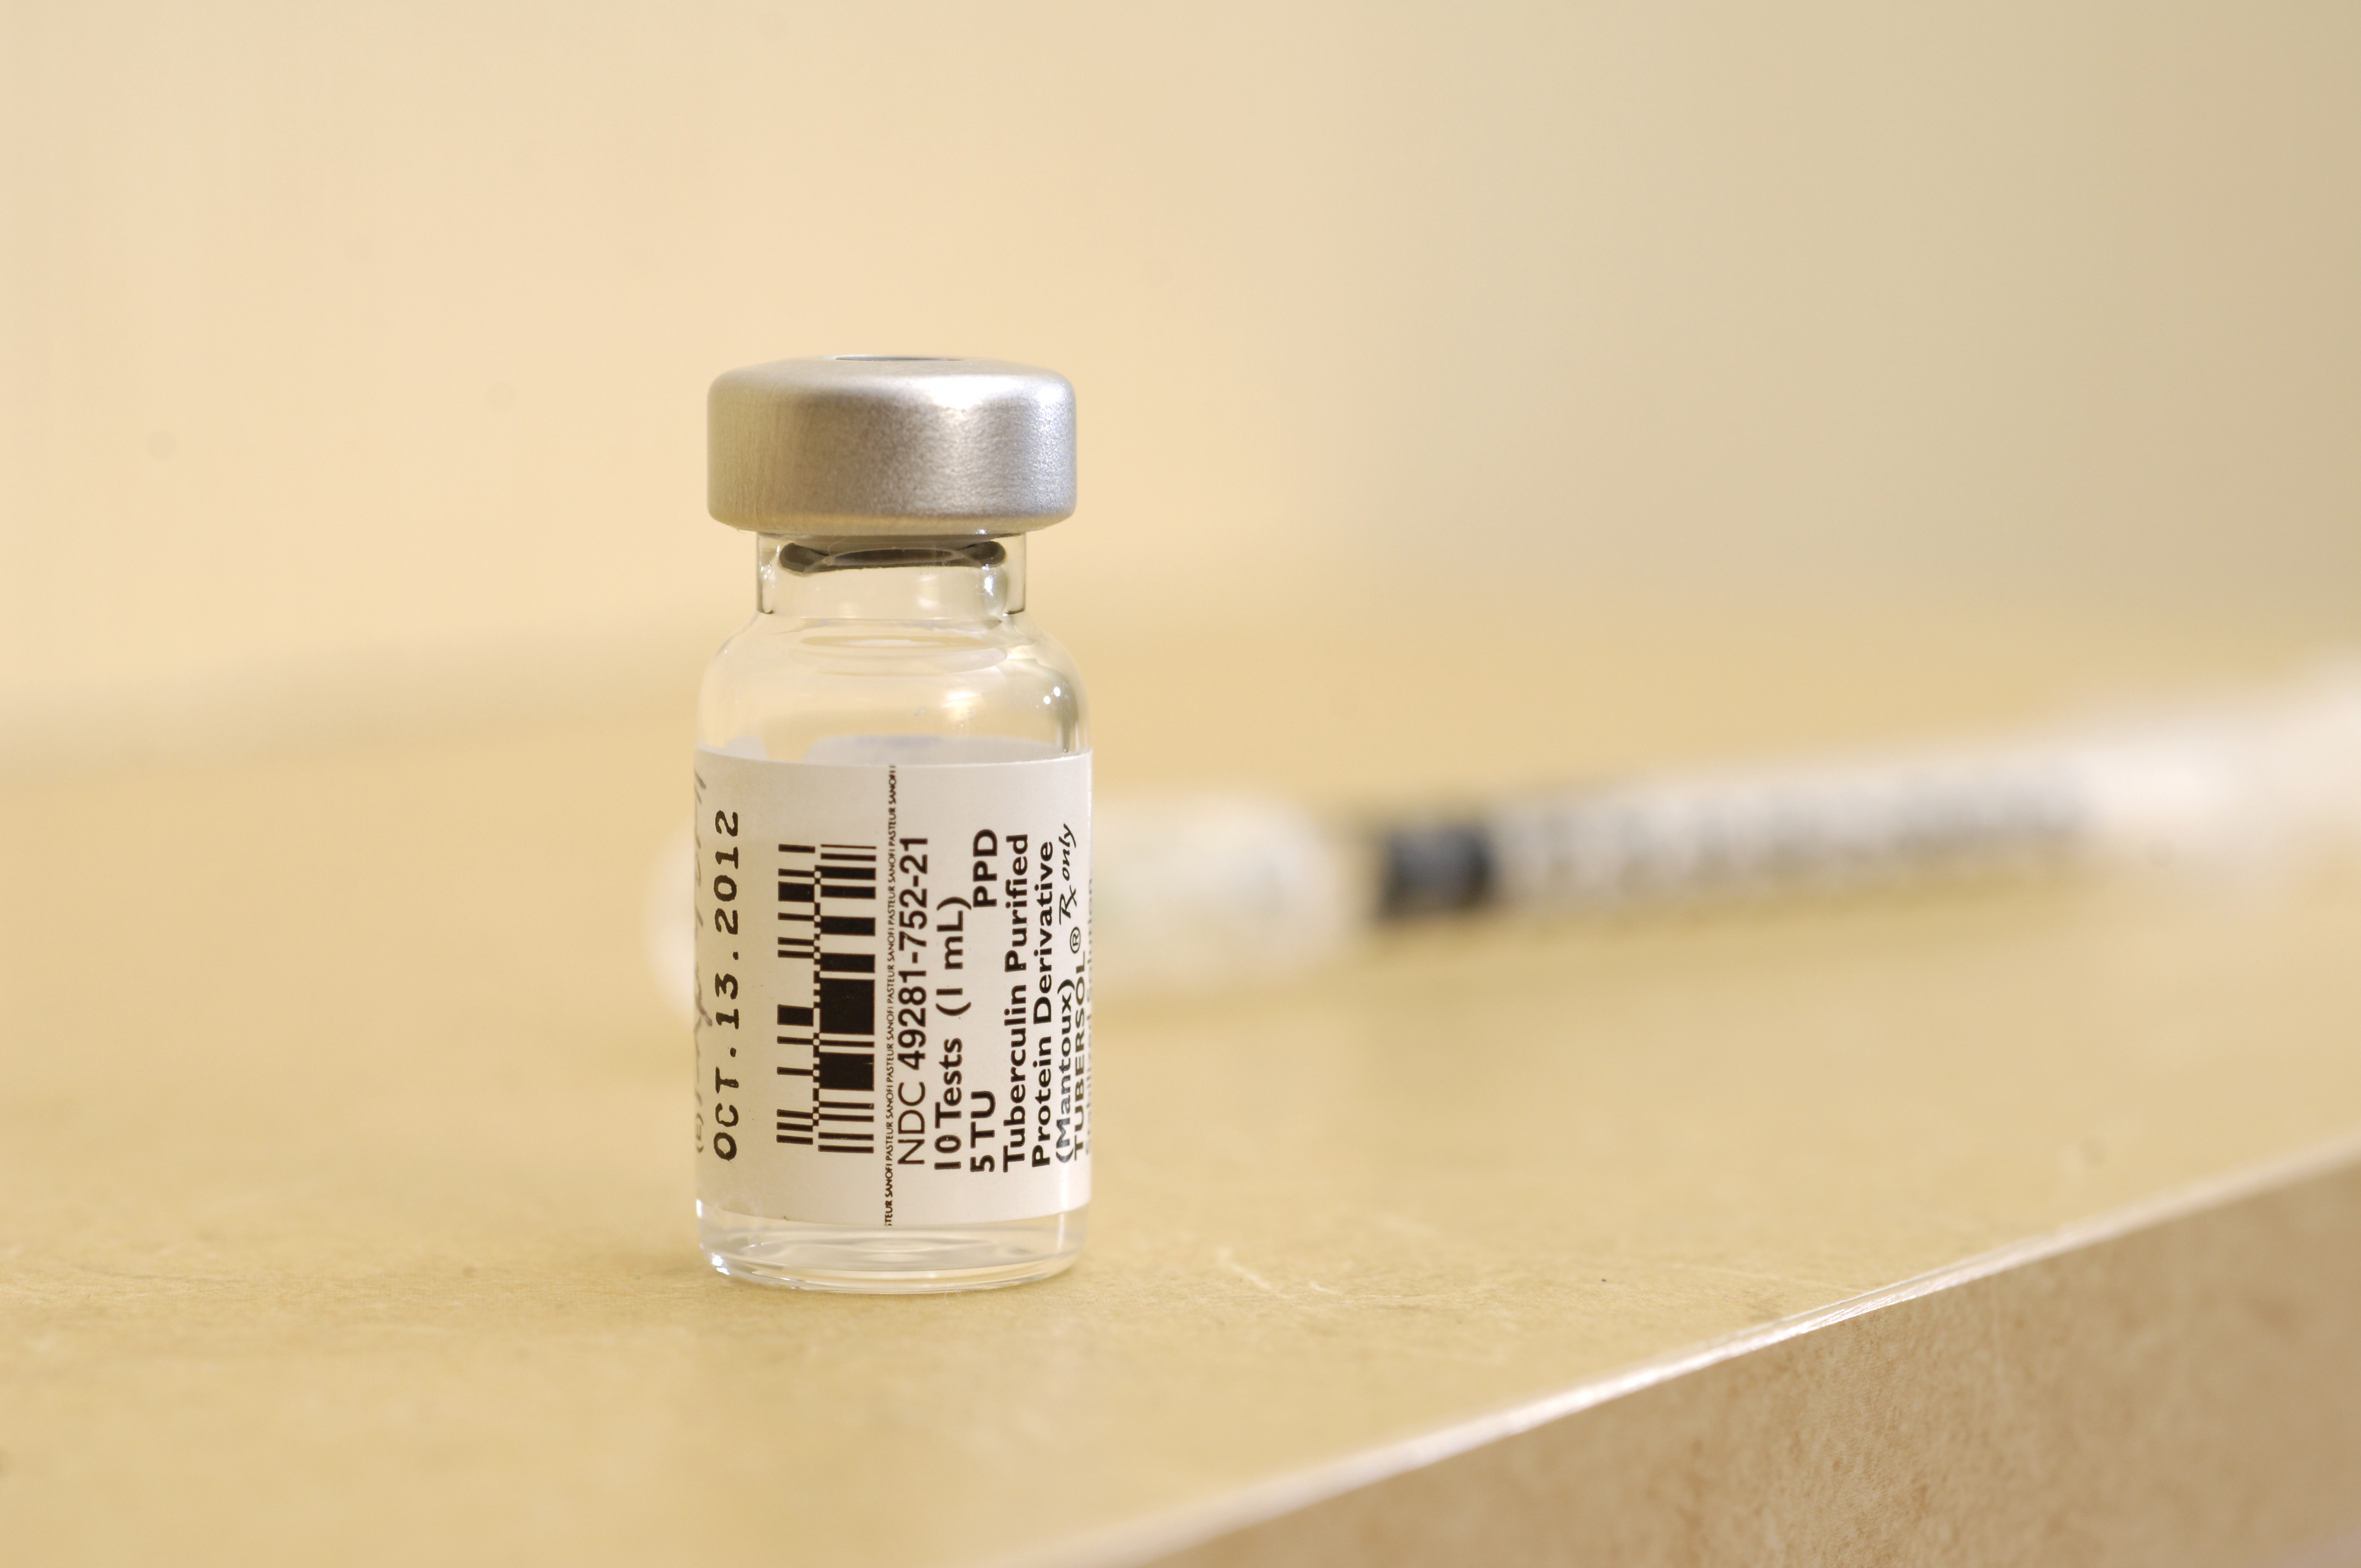 TB shot vile and syringe